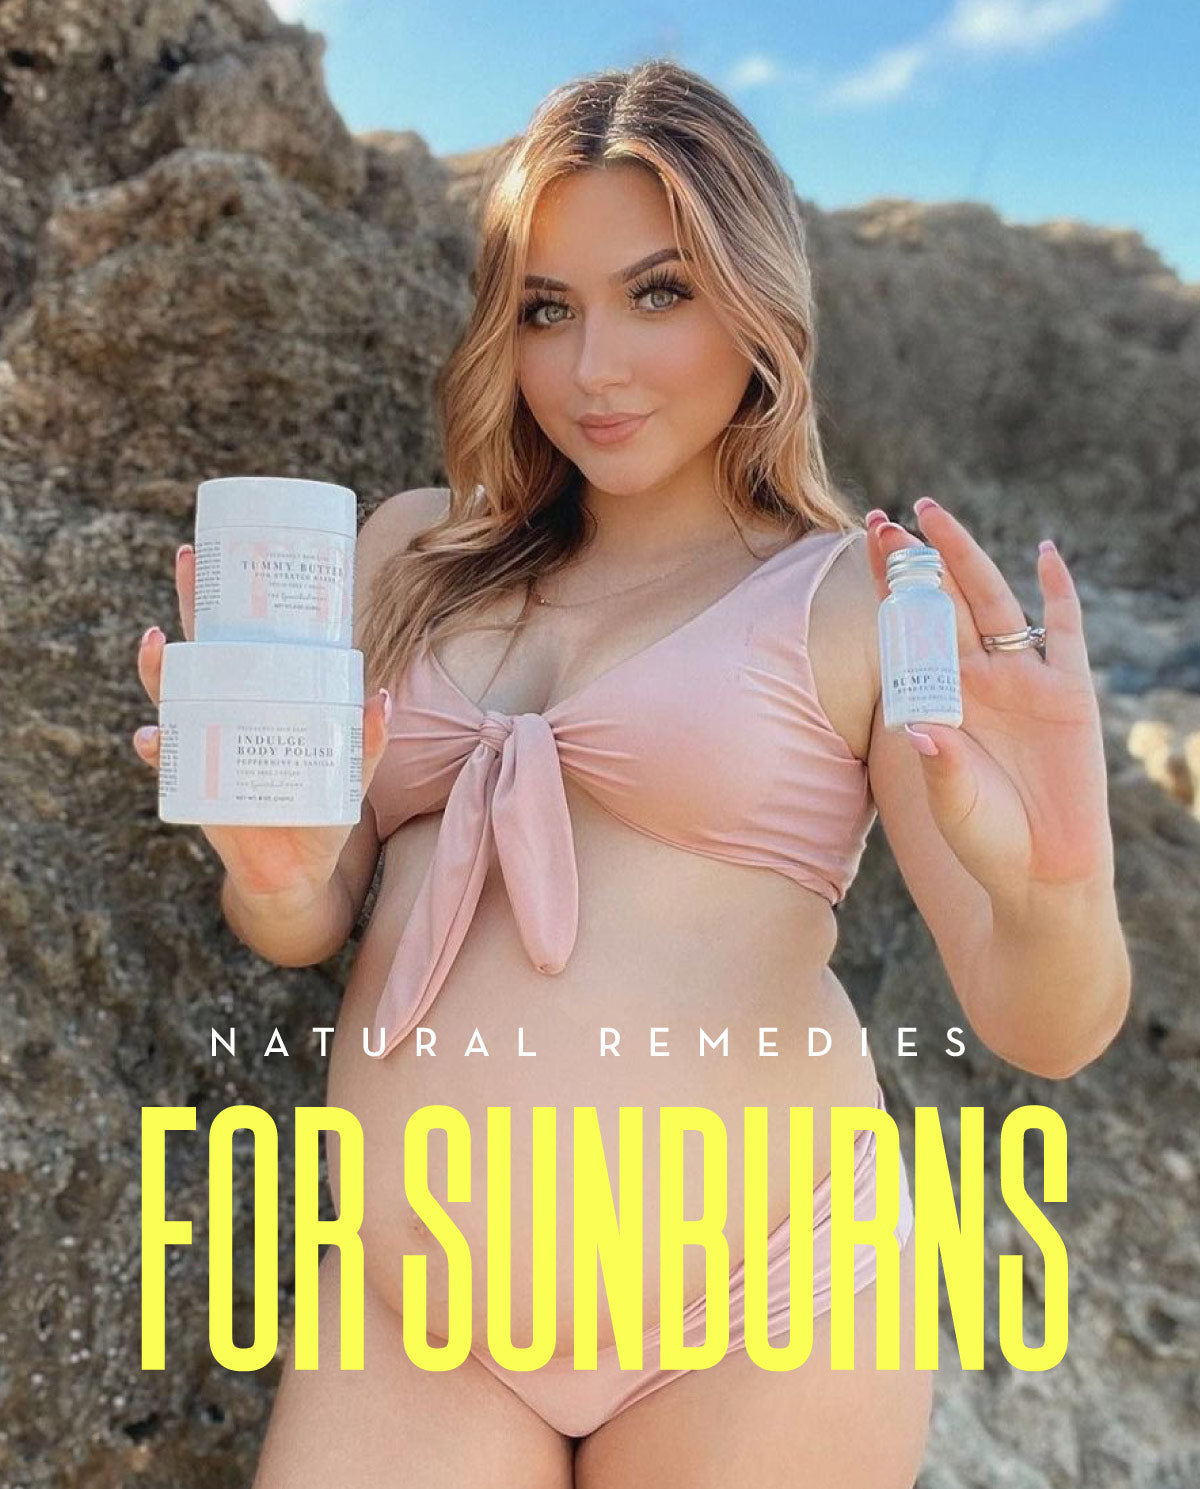 Sunburn Relief - Natural Remedies